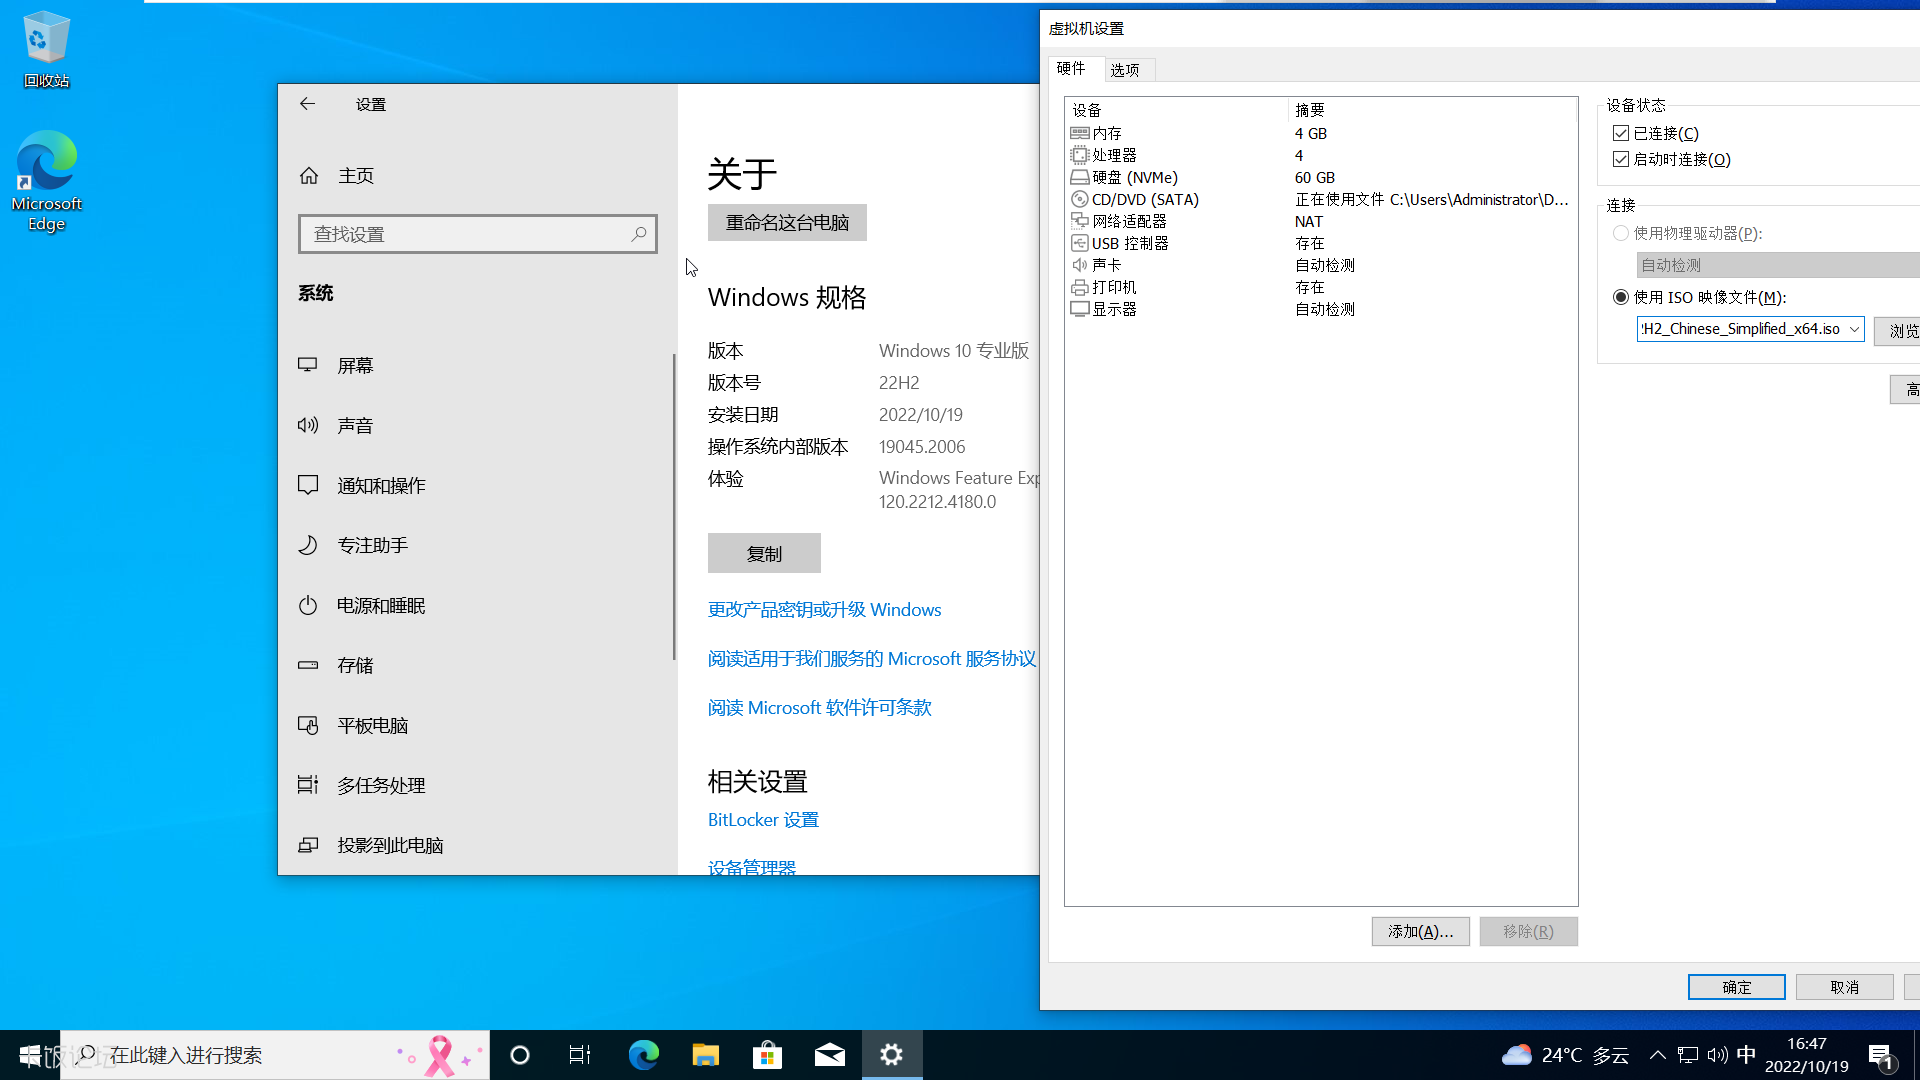 Windows10 rtm.png